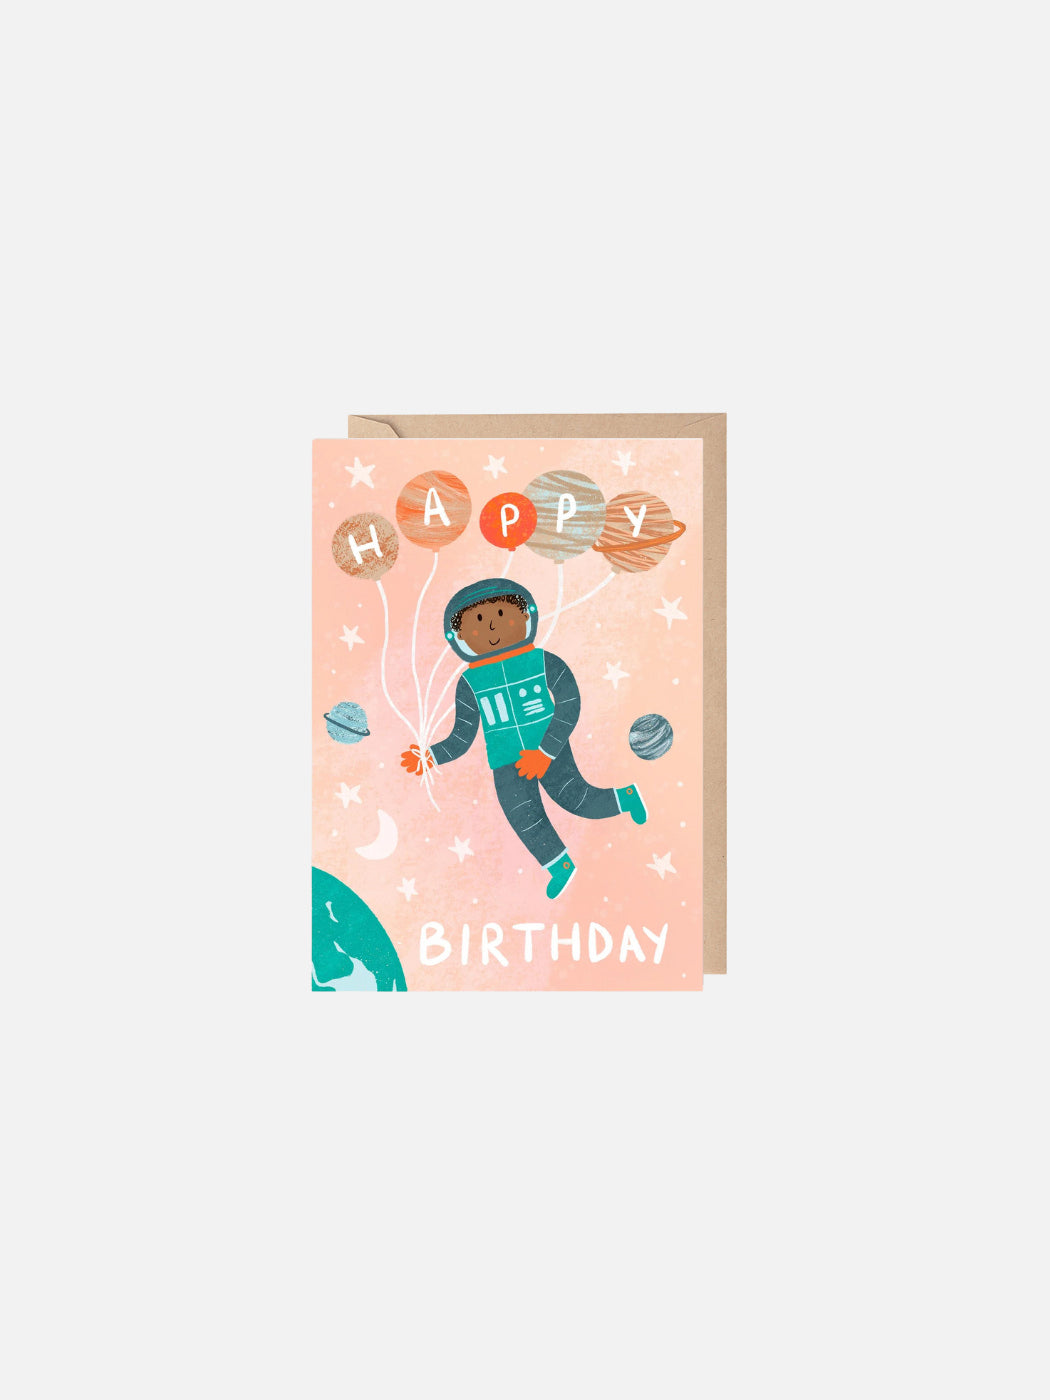 Astronaut Happy Birthday Card